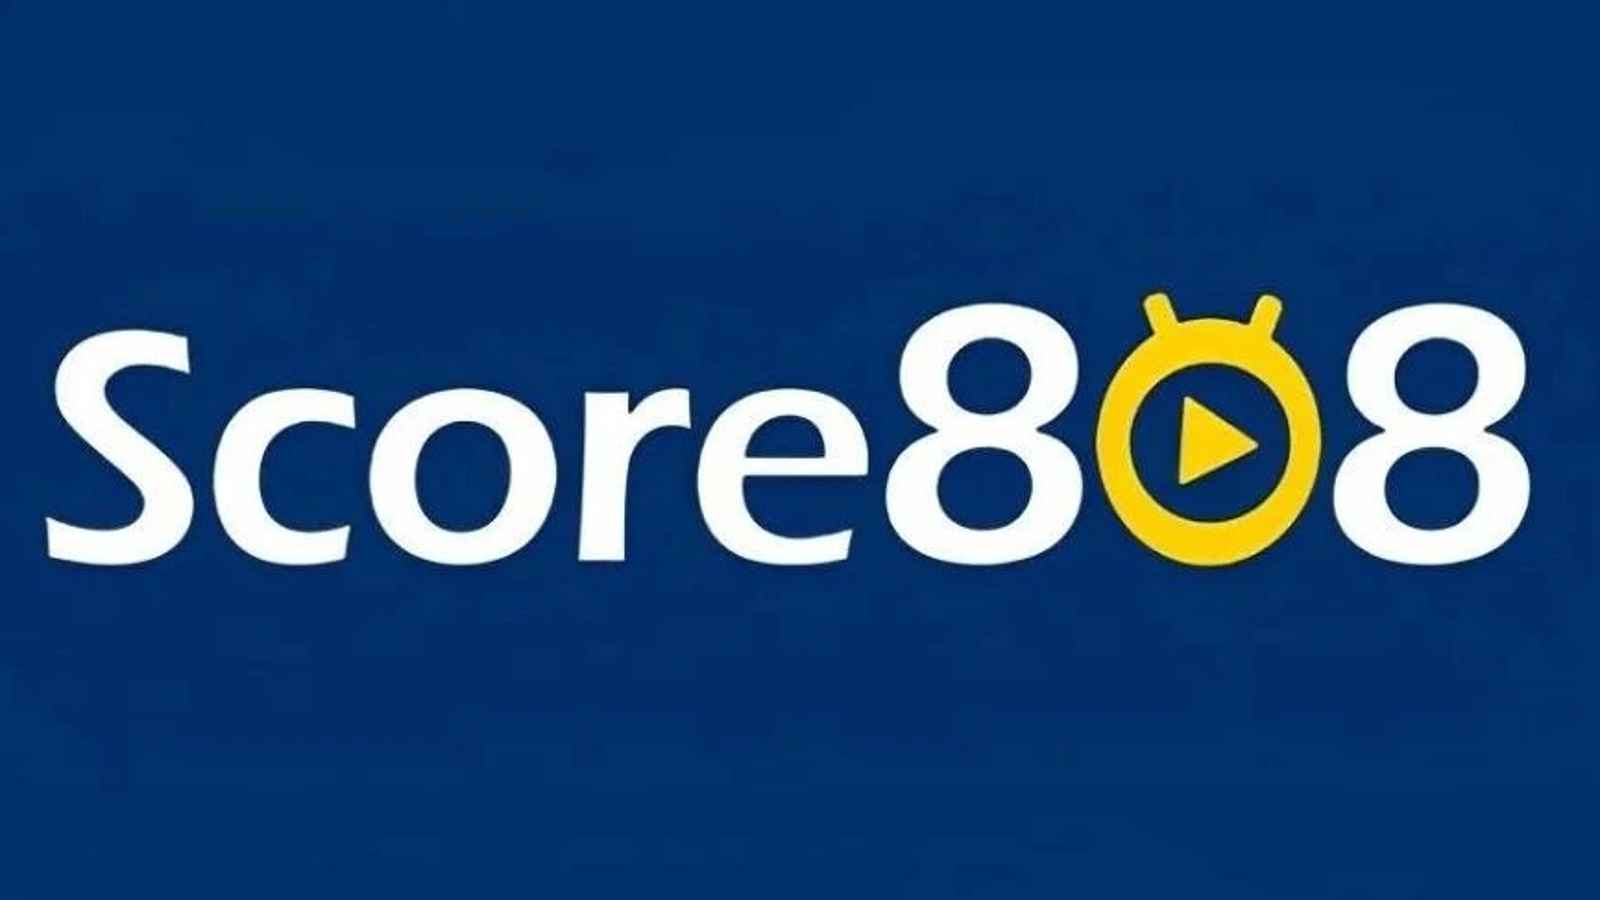 Score808 Live Streaming 2023: Soccer808 Live Football Match